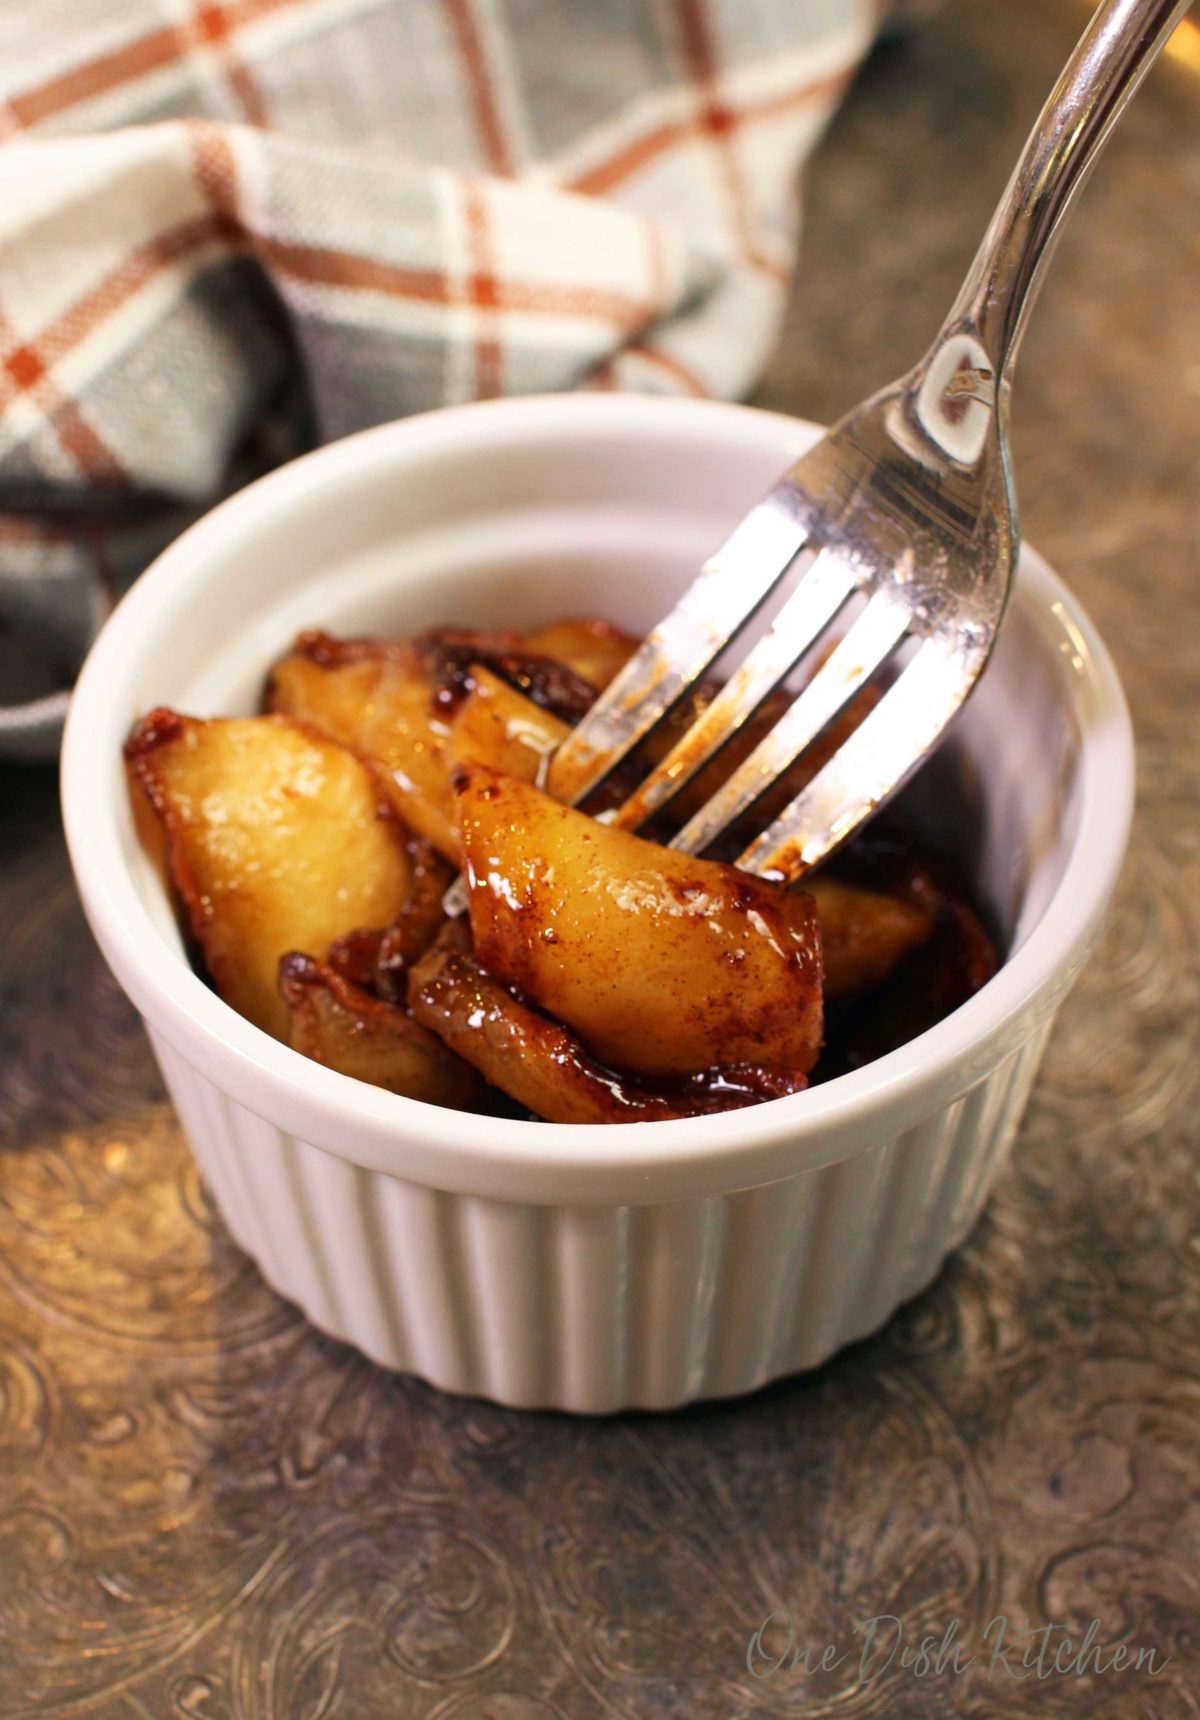 soft, fried cinnamon apples on a fork next to a white and orange plaid napkin.